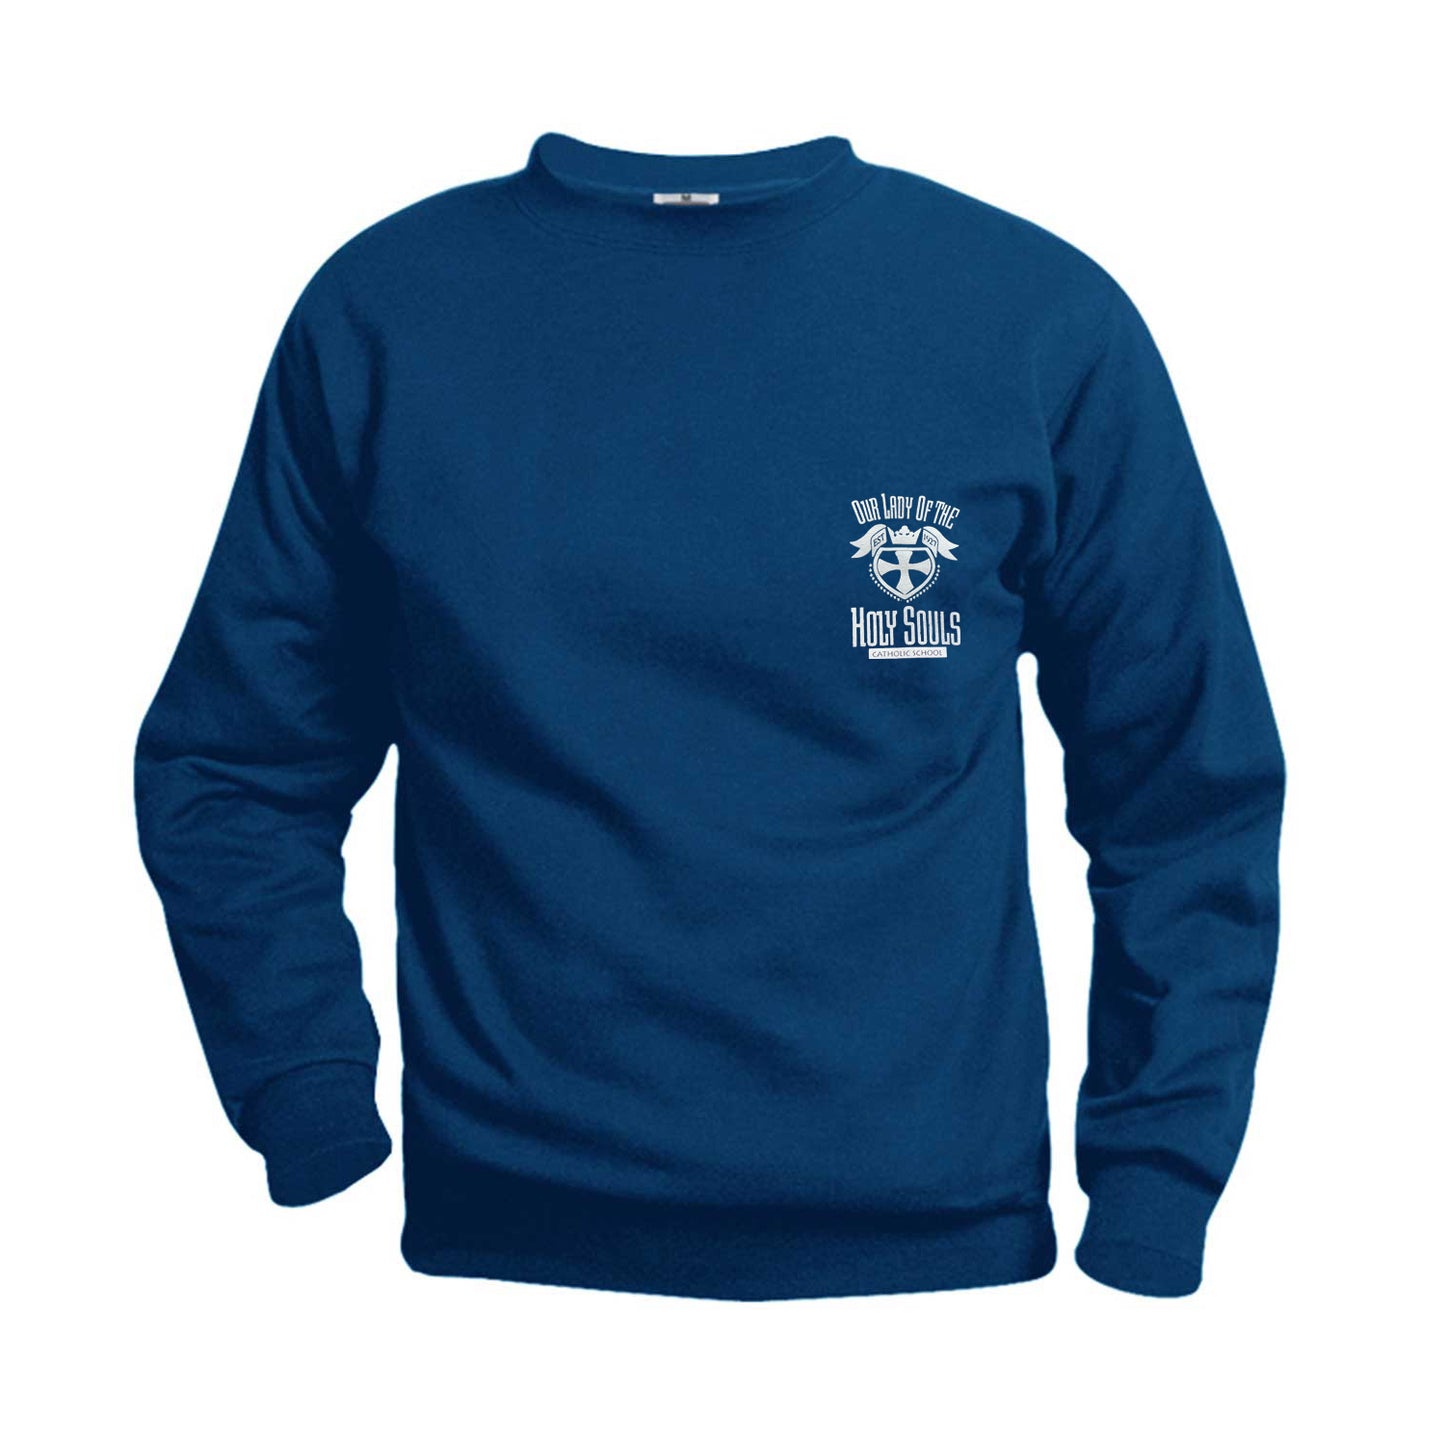 Adult Crewneck Sweatshirt With Holy Souls Logo